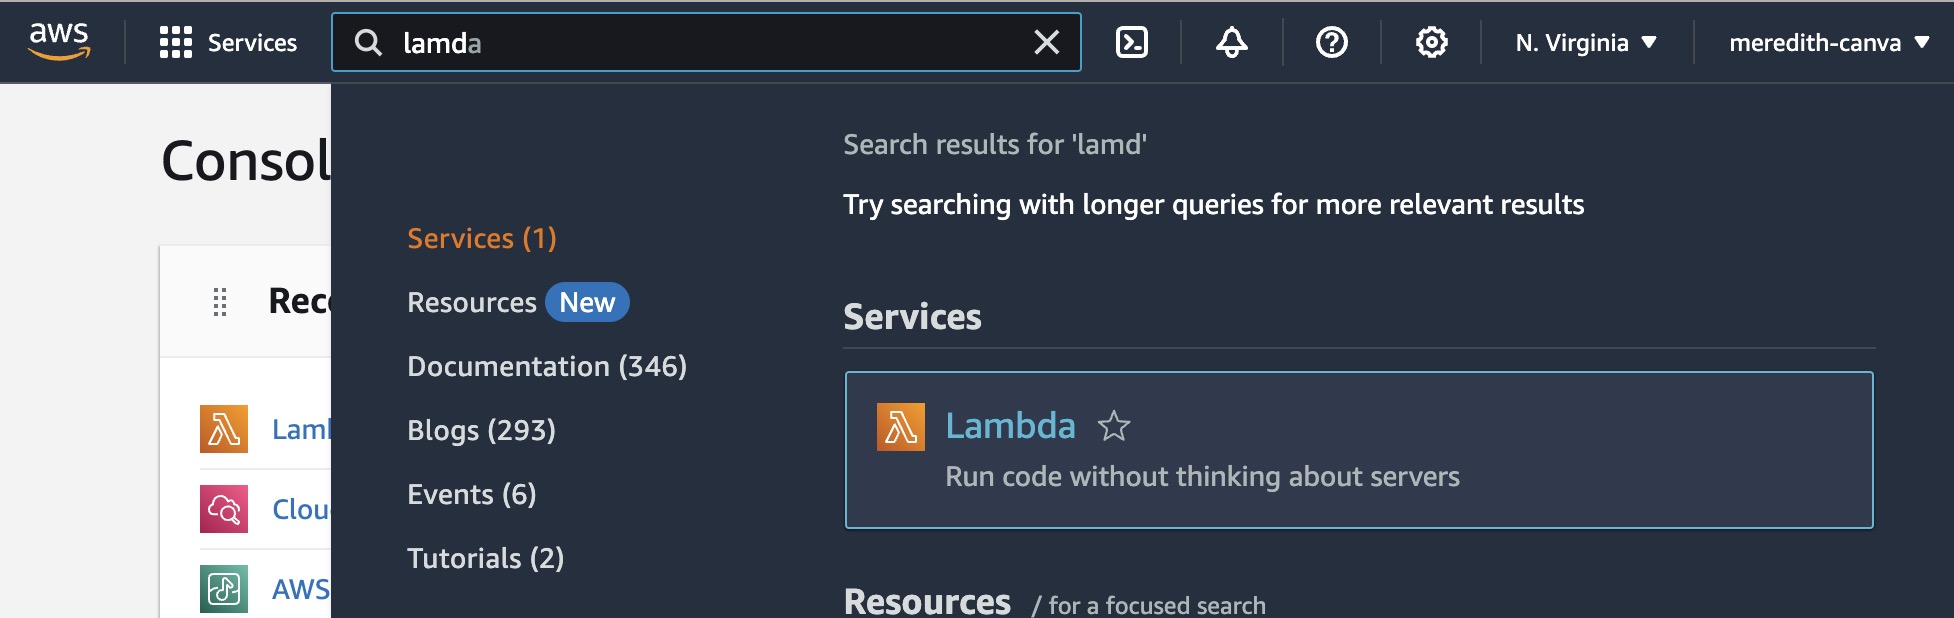 Searching for Lambda on amazon